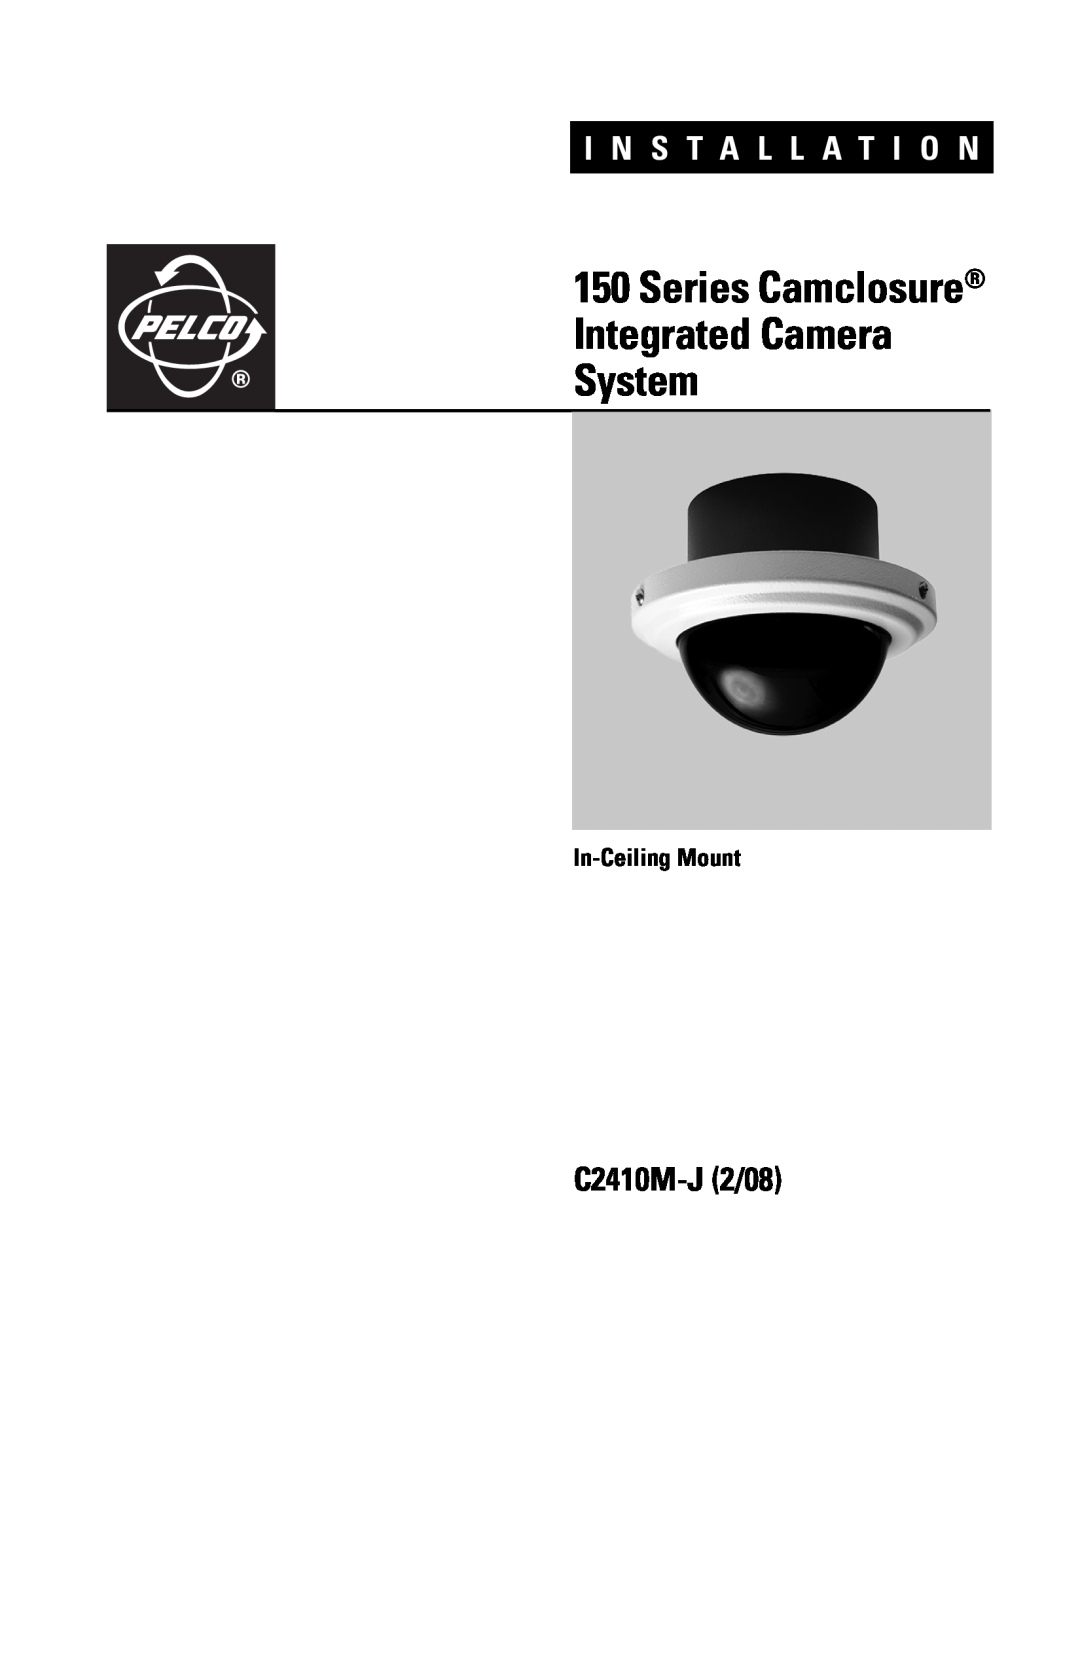 Pelco manual Series Camclosure Integrated Camera System, C2410M-J2/08, In-CeilingMount, I N S T A L L A T I O N 